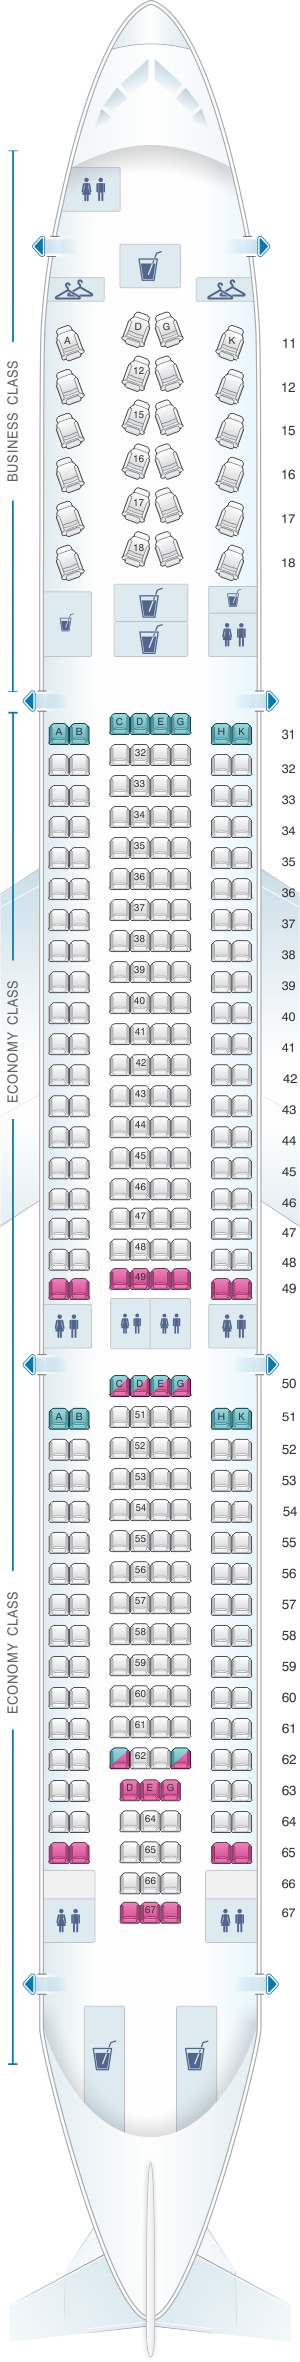 Airbus A330 300 Seat Map Sexiz Pix